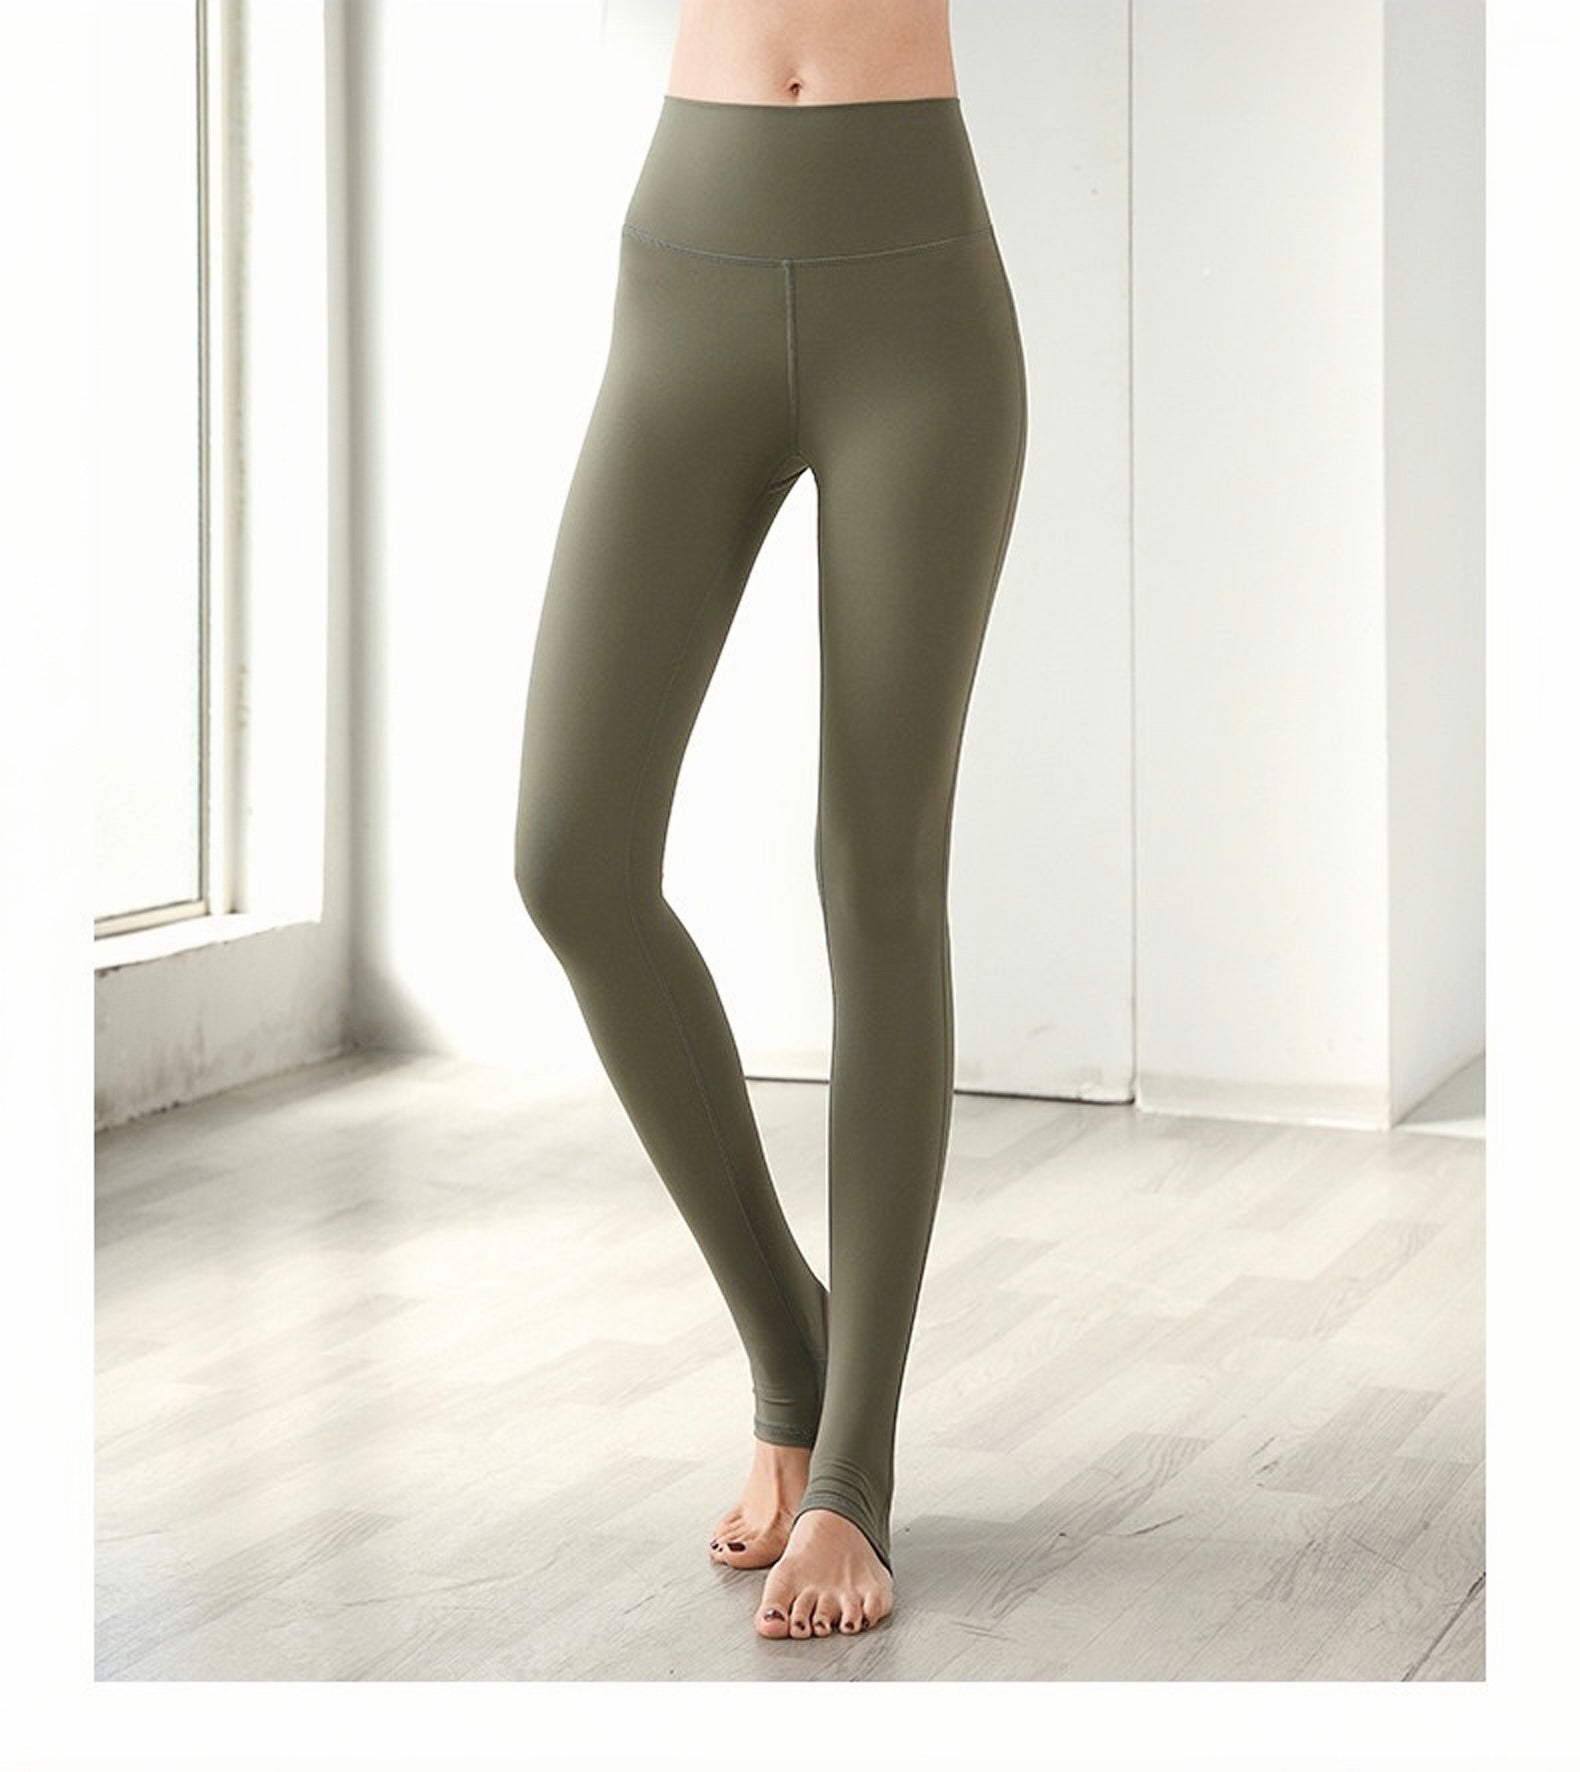 Bare Sensation Skin-Friendly Yoga Pants - High-Waisted, Butt